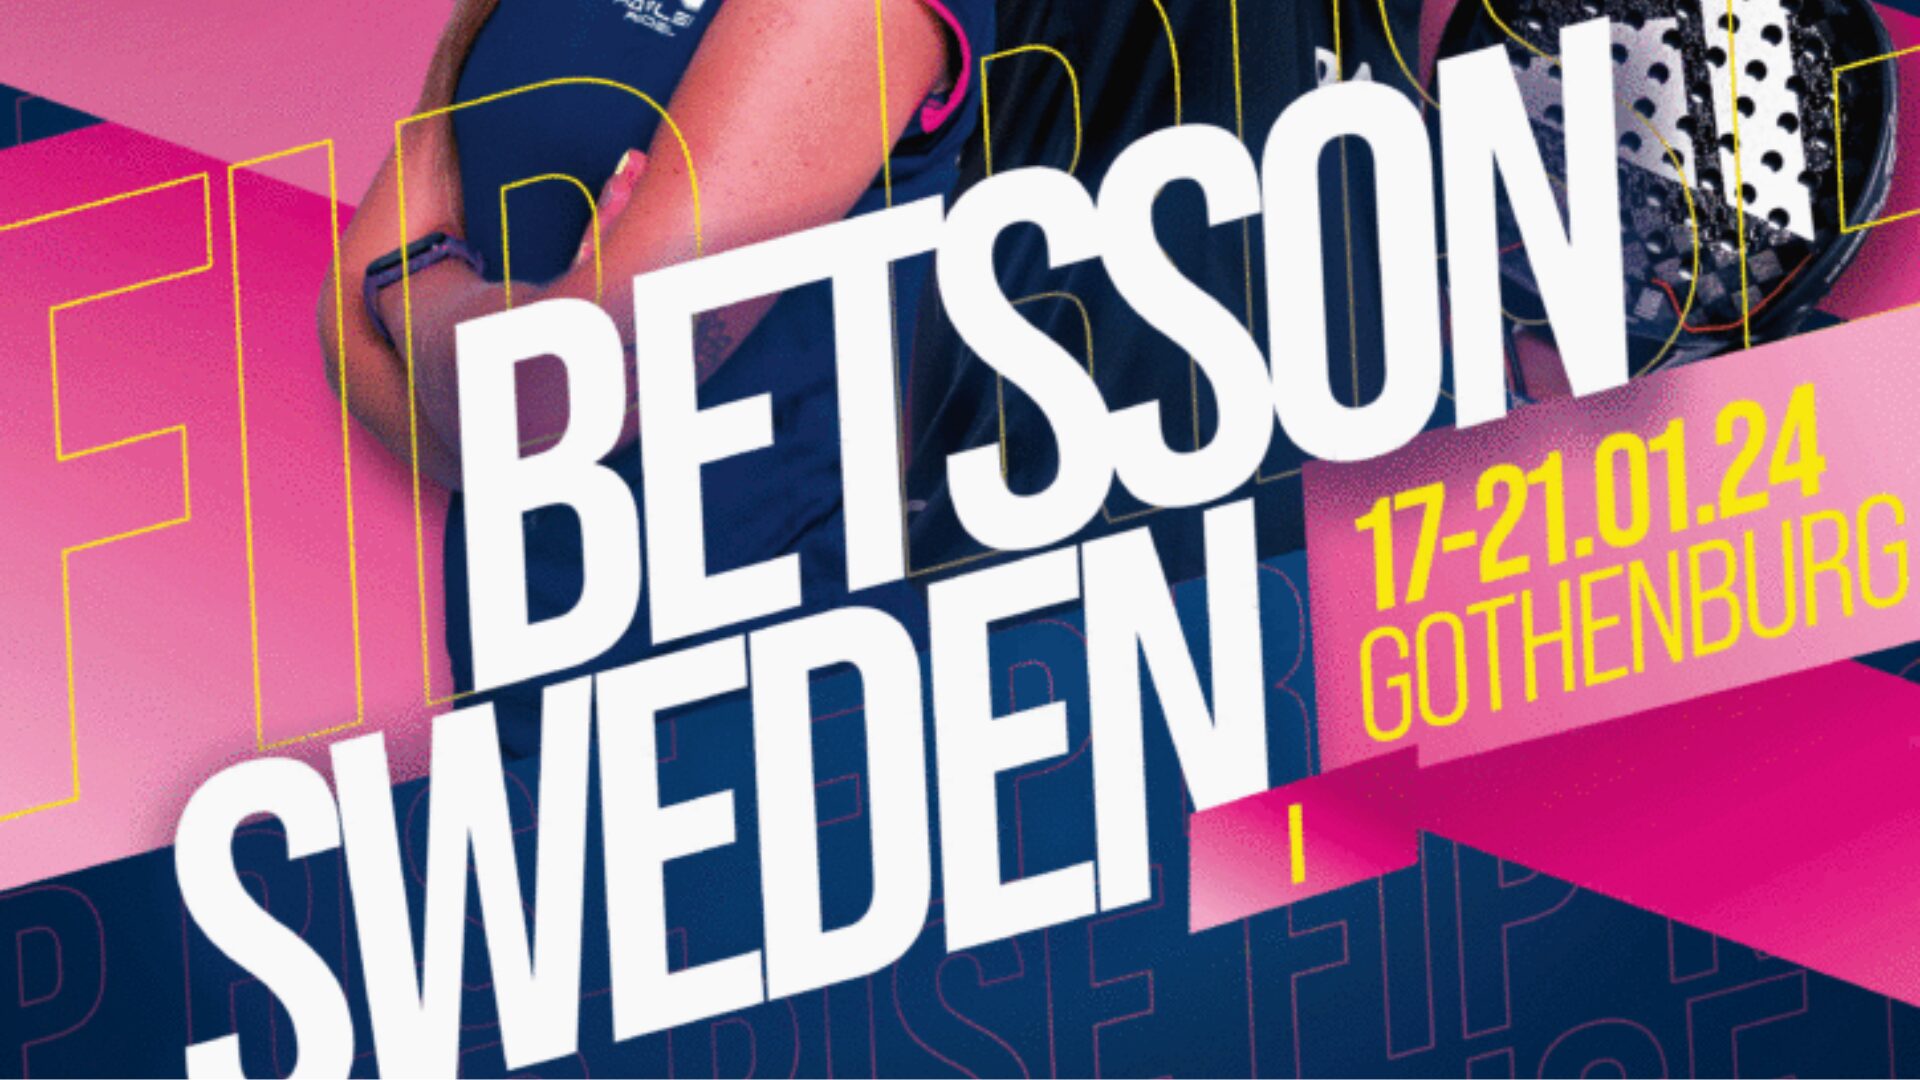 Betsson Sweden FIP Rise January 2024 Gothenburg